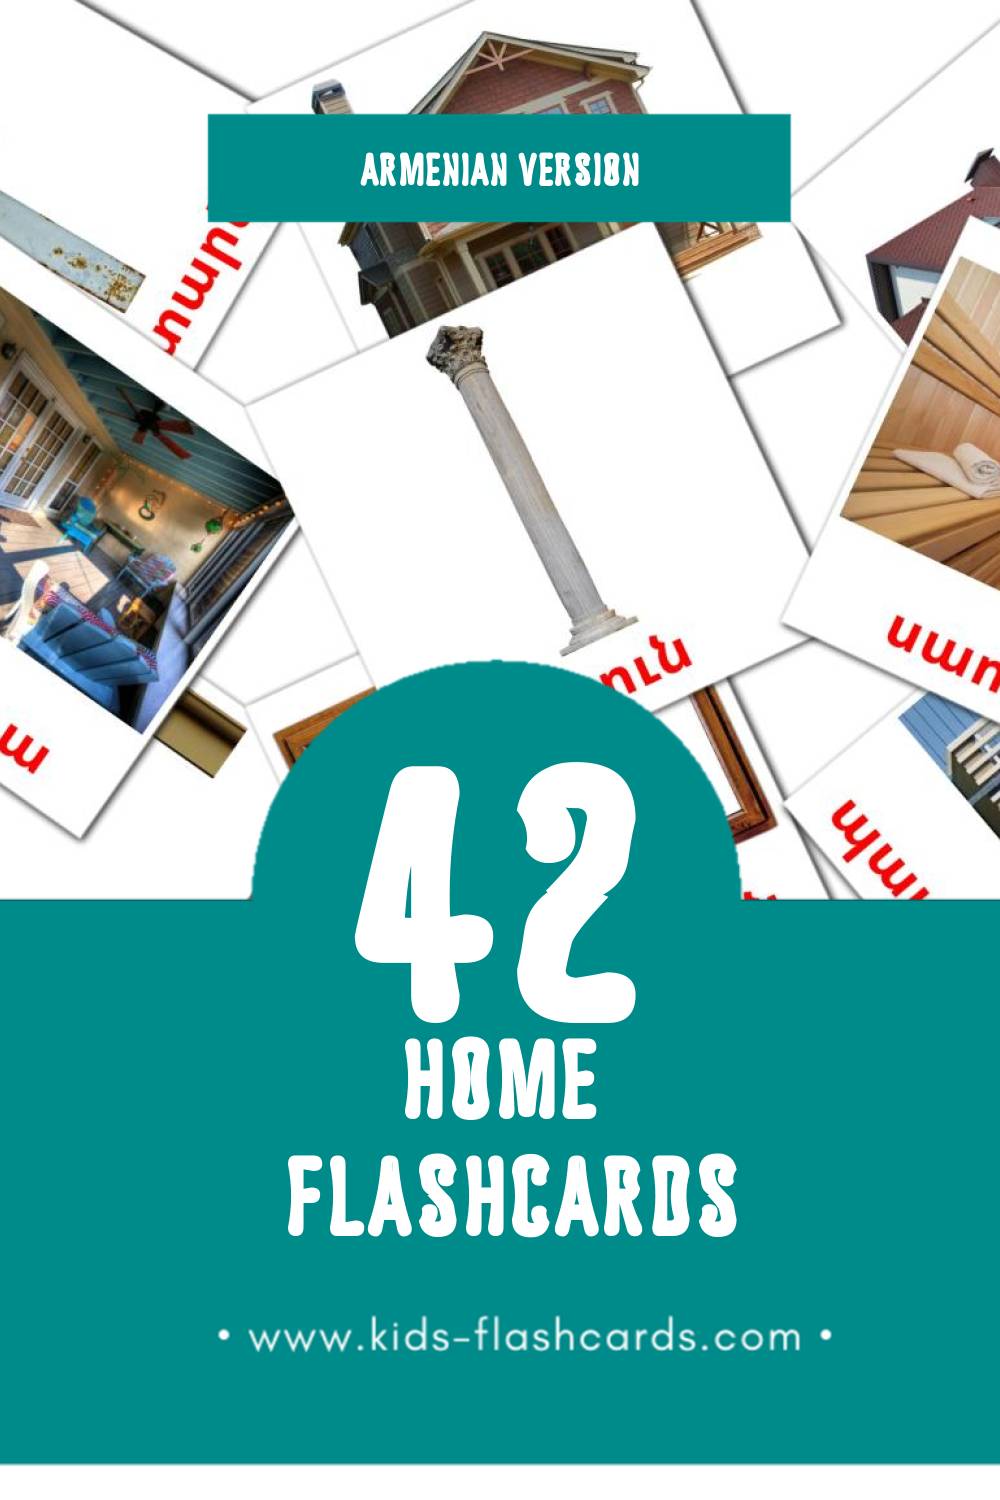 Visual տուն Flashcards for Toddlers (17 cards in Armenian)